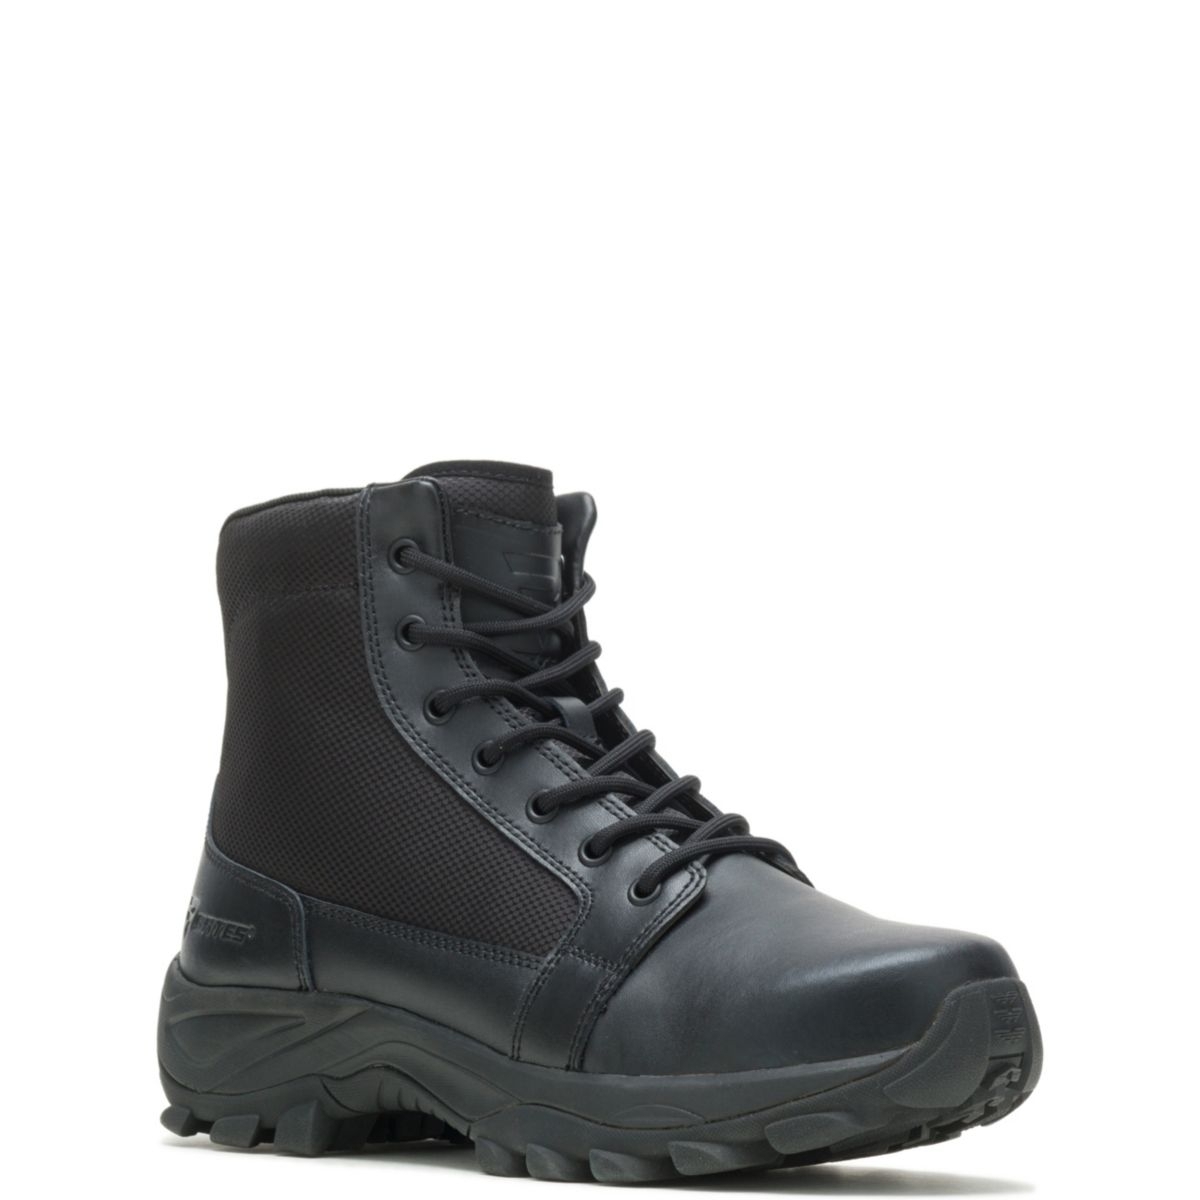 Bates Men's Fuse Mid 6-inch Side Zip Boot Black - E06506 BLACK - BLACK, 10.5 Wide